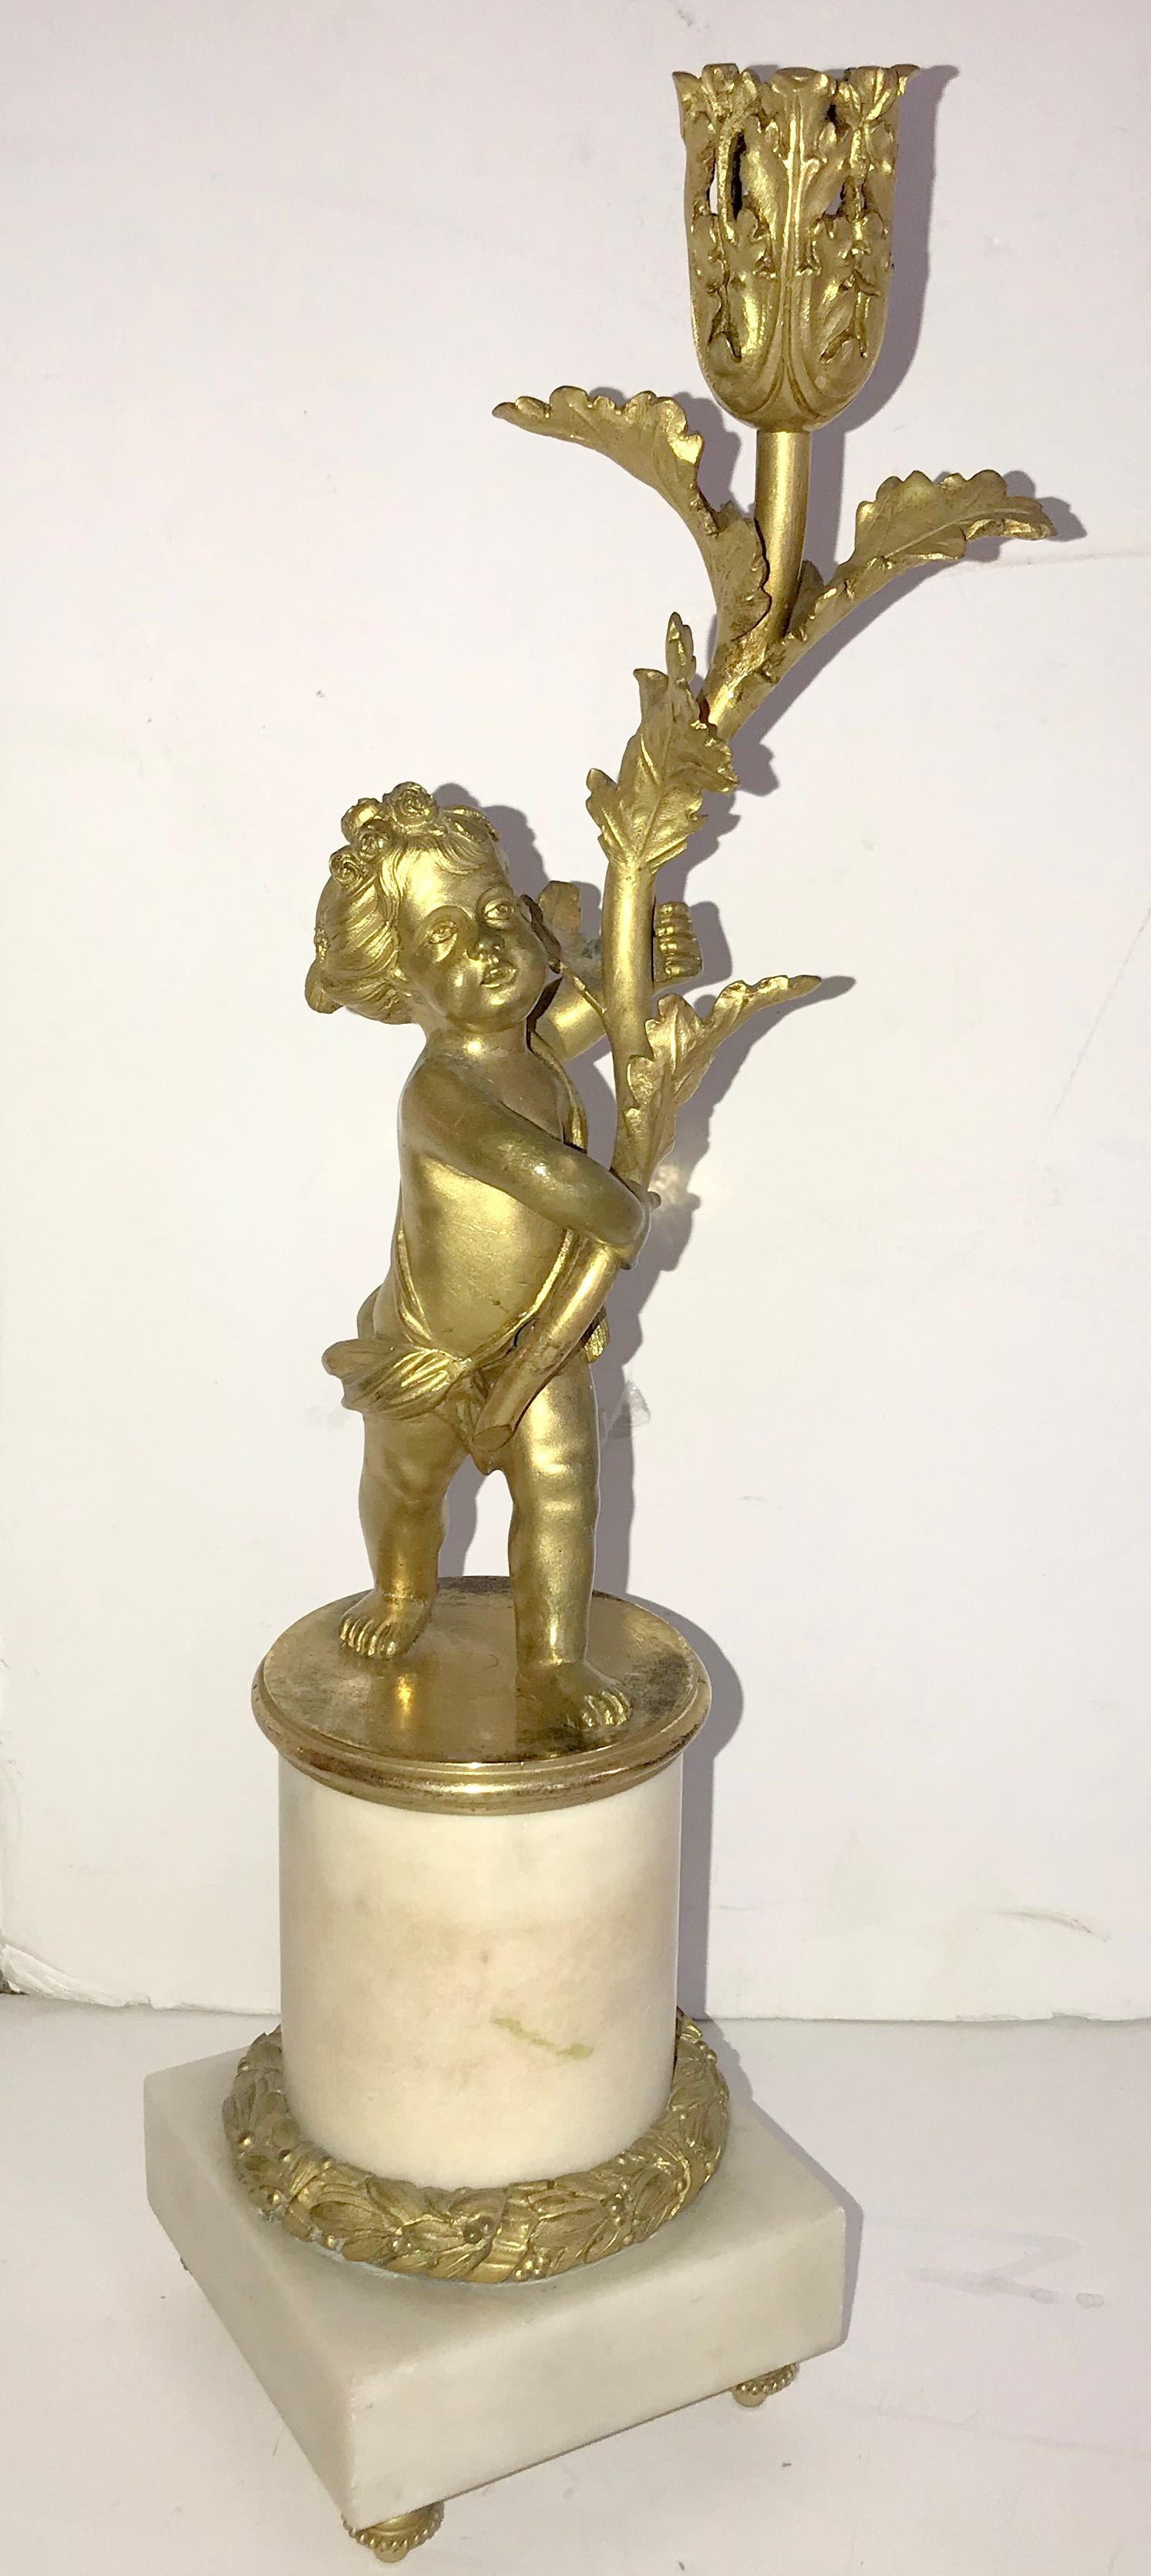 A wonderful pair of Cherub doré bronze / putti figure pierced candelabra with ormolu mounts raised on marble bases.